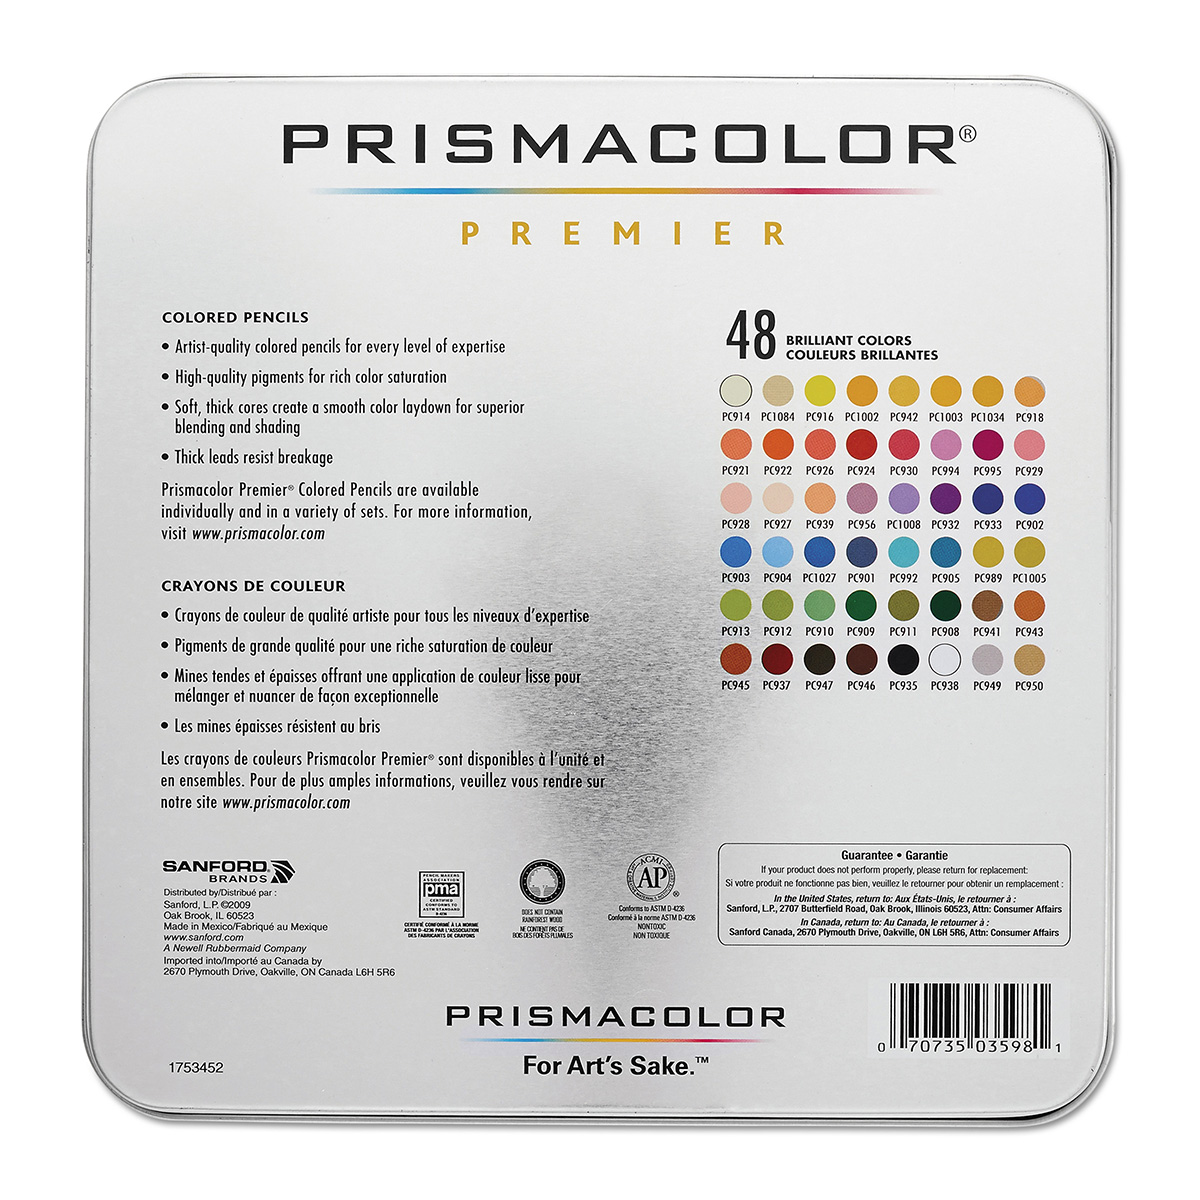 https://theinkstone.com/wp-content/uploads/2020/09/Prismacolor-Colored-Pencil-Set-48-1.jpg